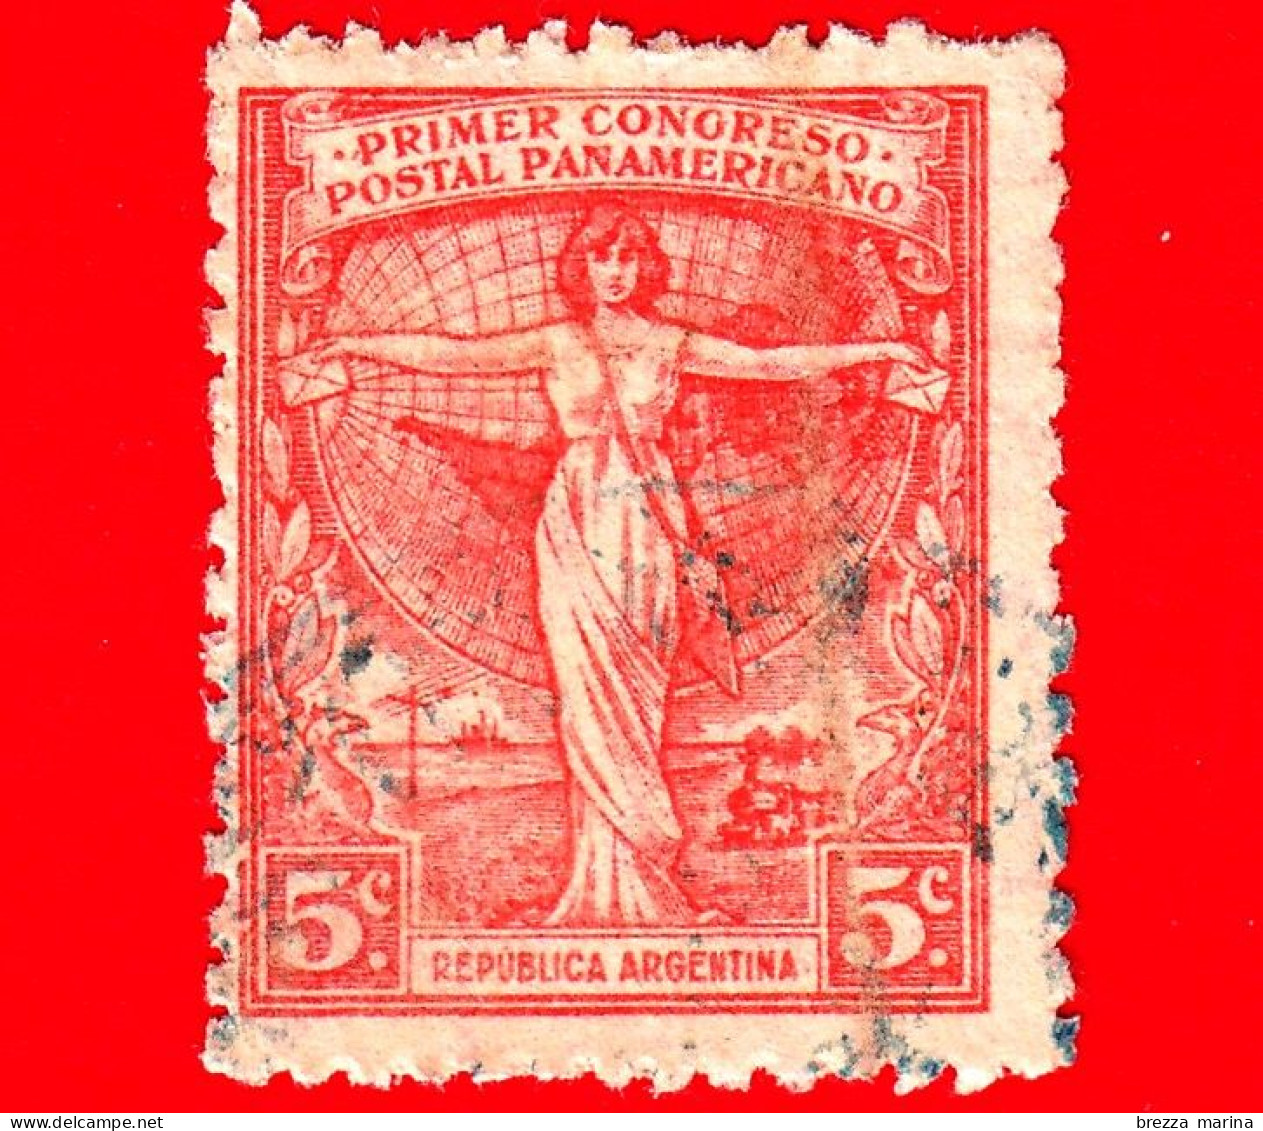 ARGENTINA - Usato - 1922 - Congresso Postale Panamericano - Allegoria - "Republica Argentina" - 5 - Used Stamps